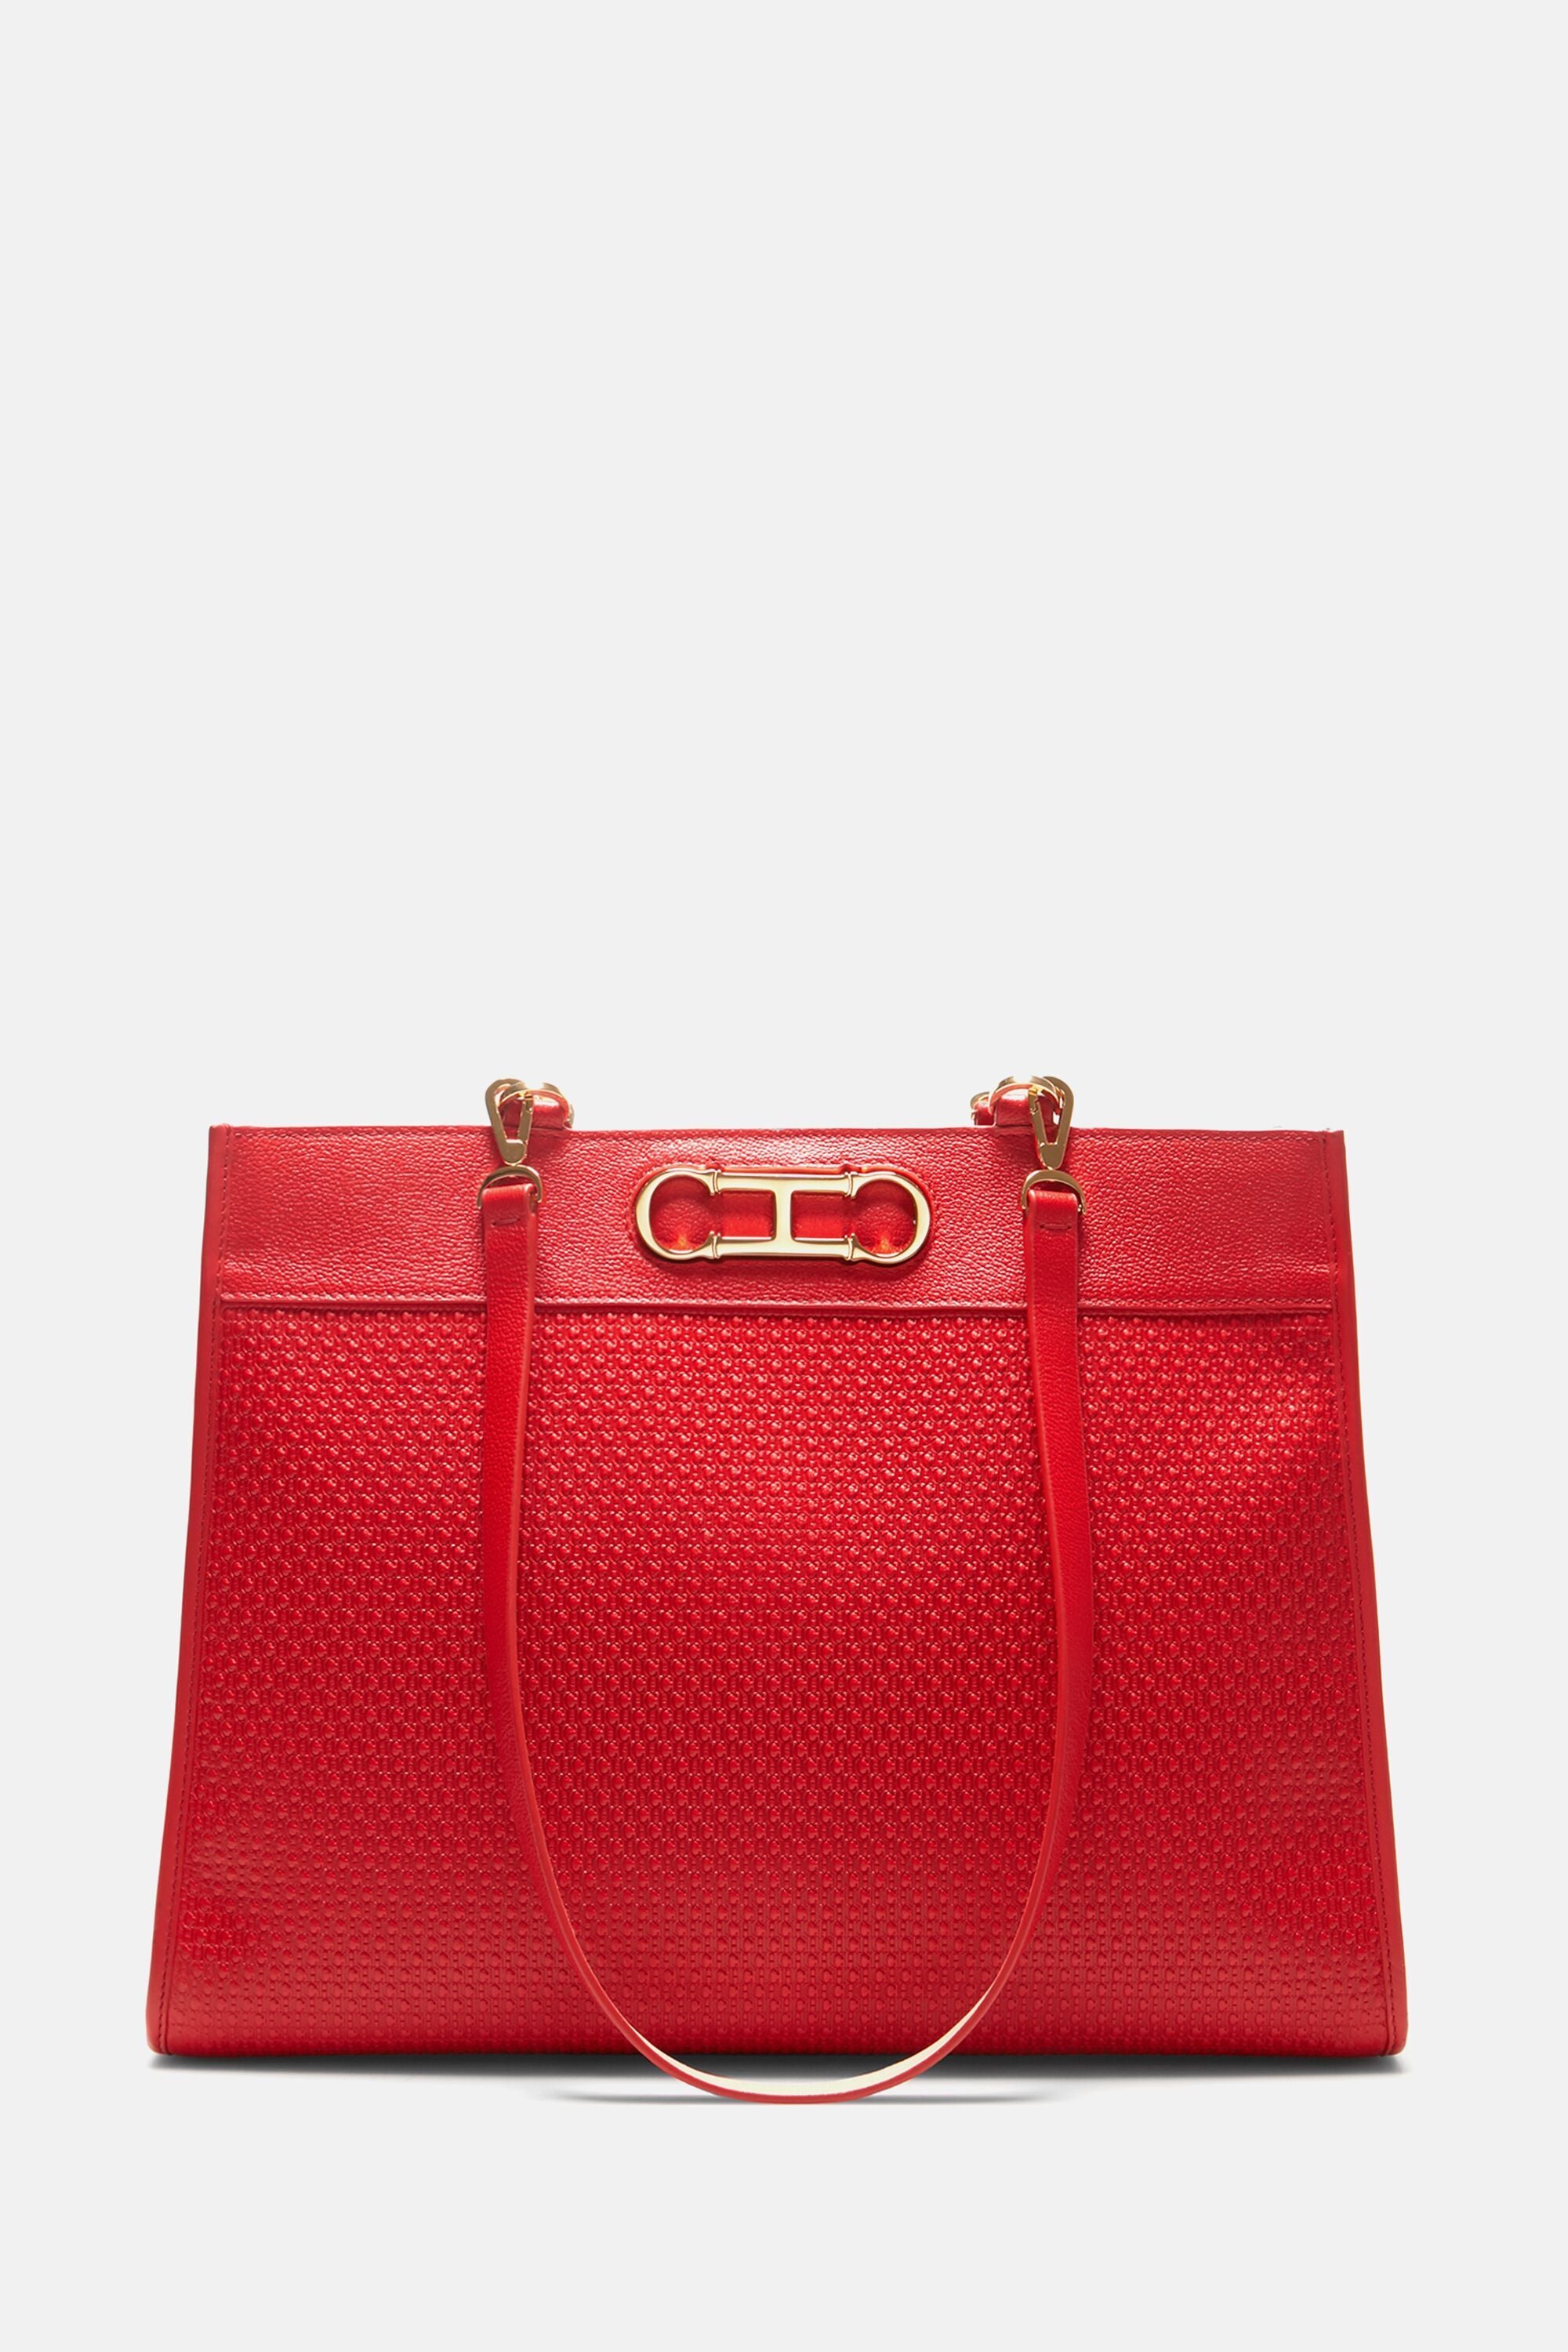 Initials Insignia Shopping | Large shoulder bag red - CH Carolina 